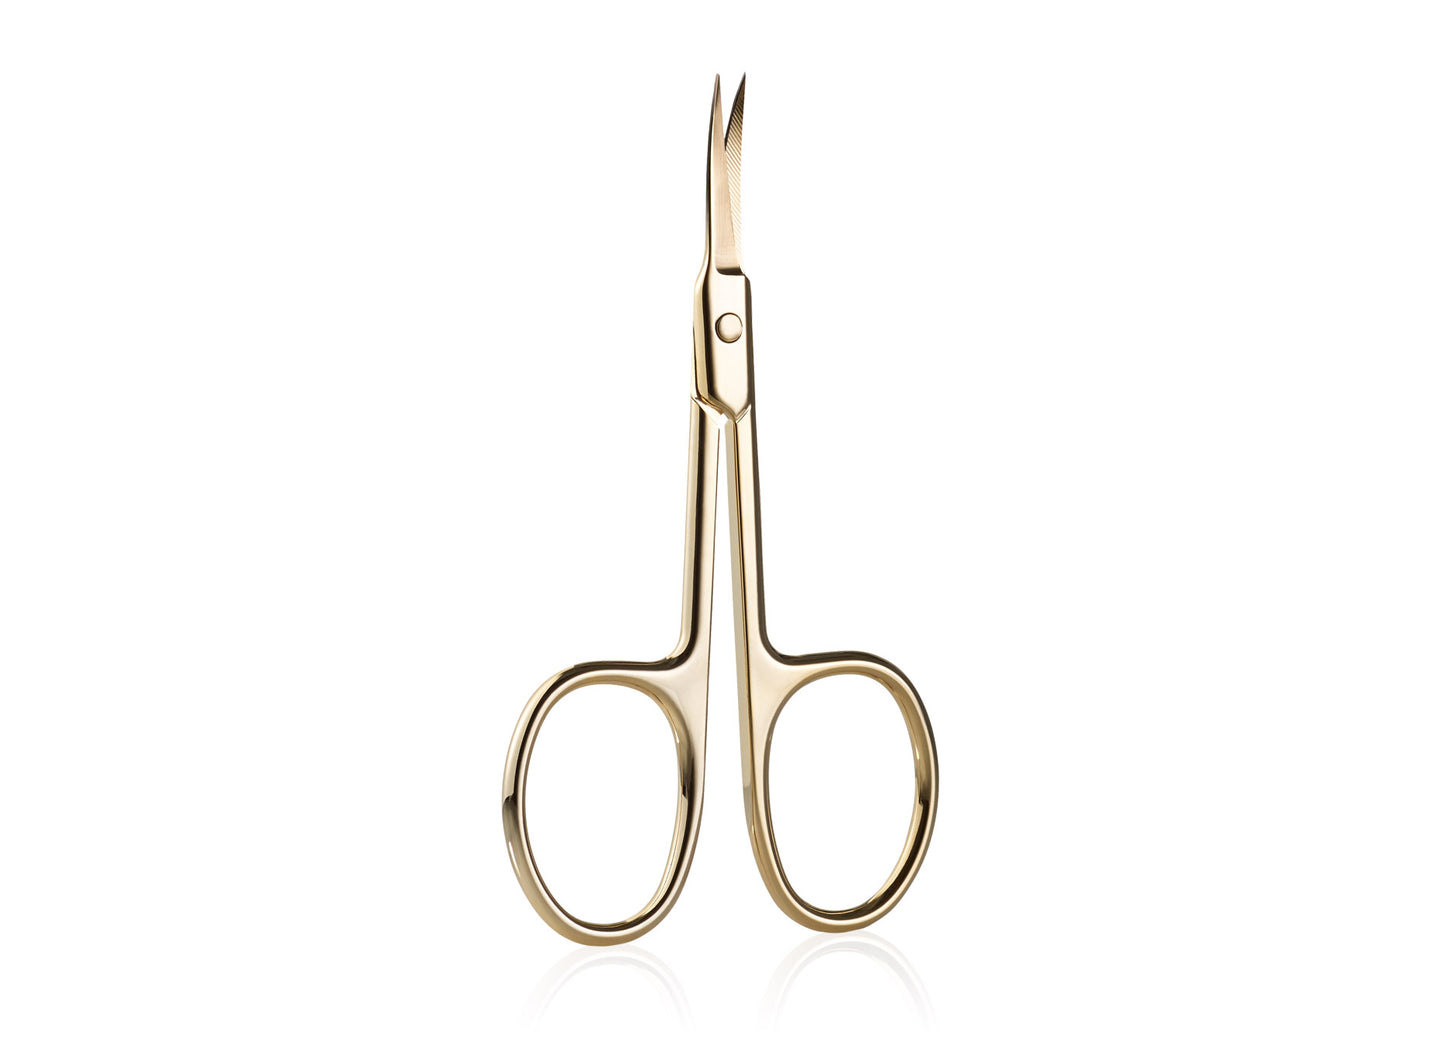 featured-image - eyelash scissors from lash star beauty